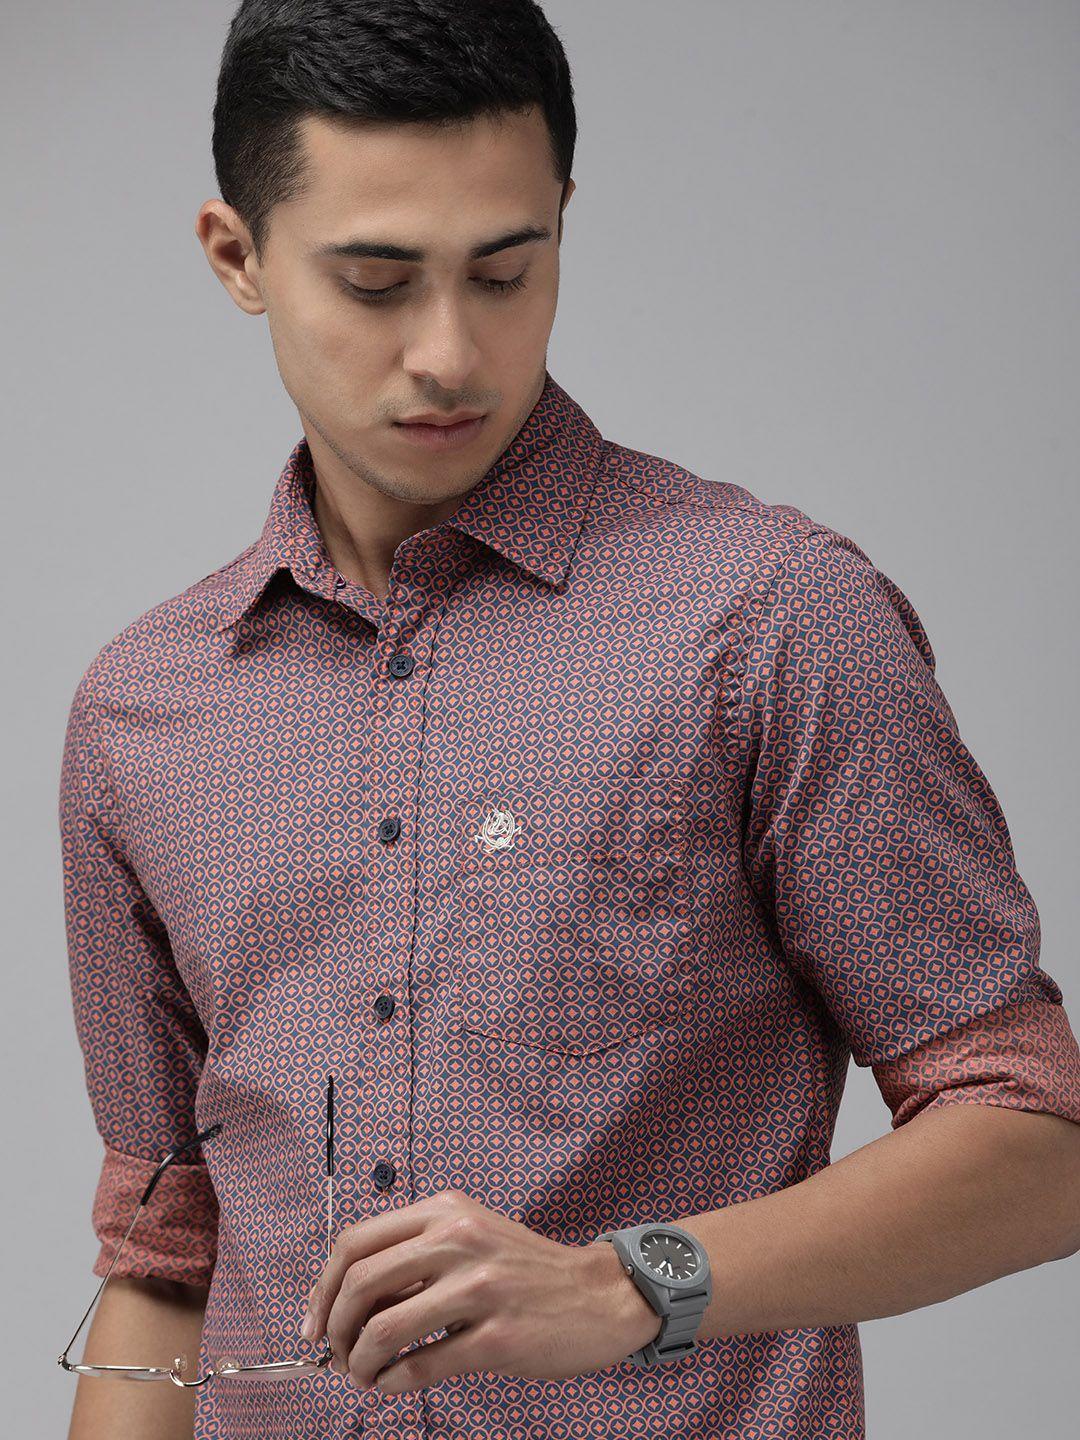 u-s-polo-assn-men-standard-geometric-printed-pure-cotton-casual-shirt